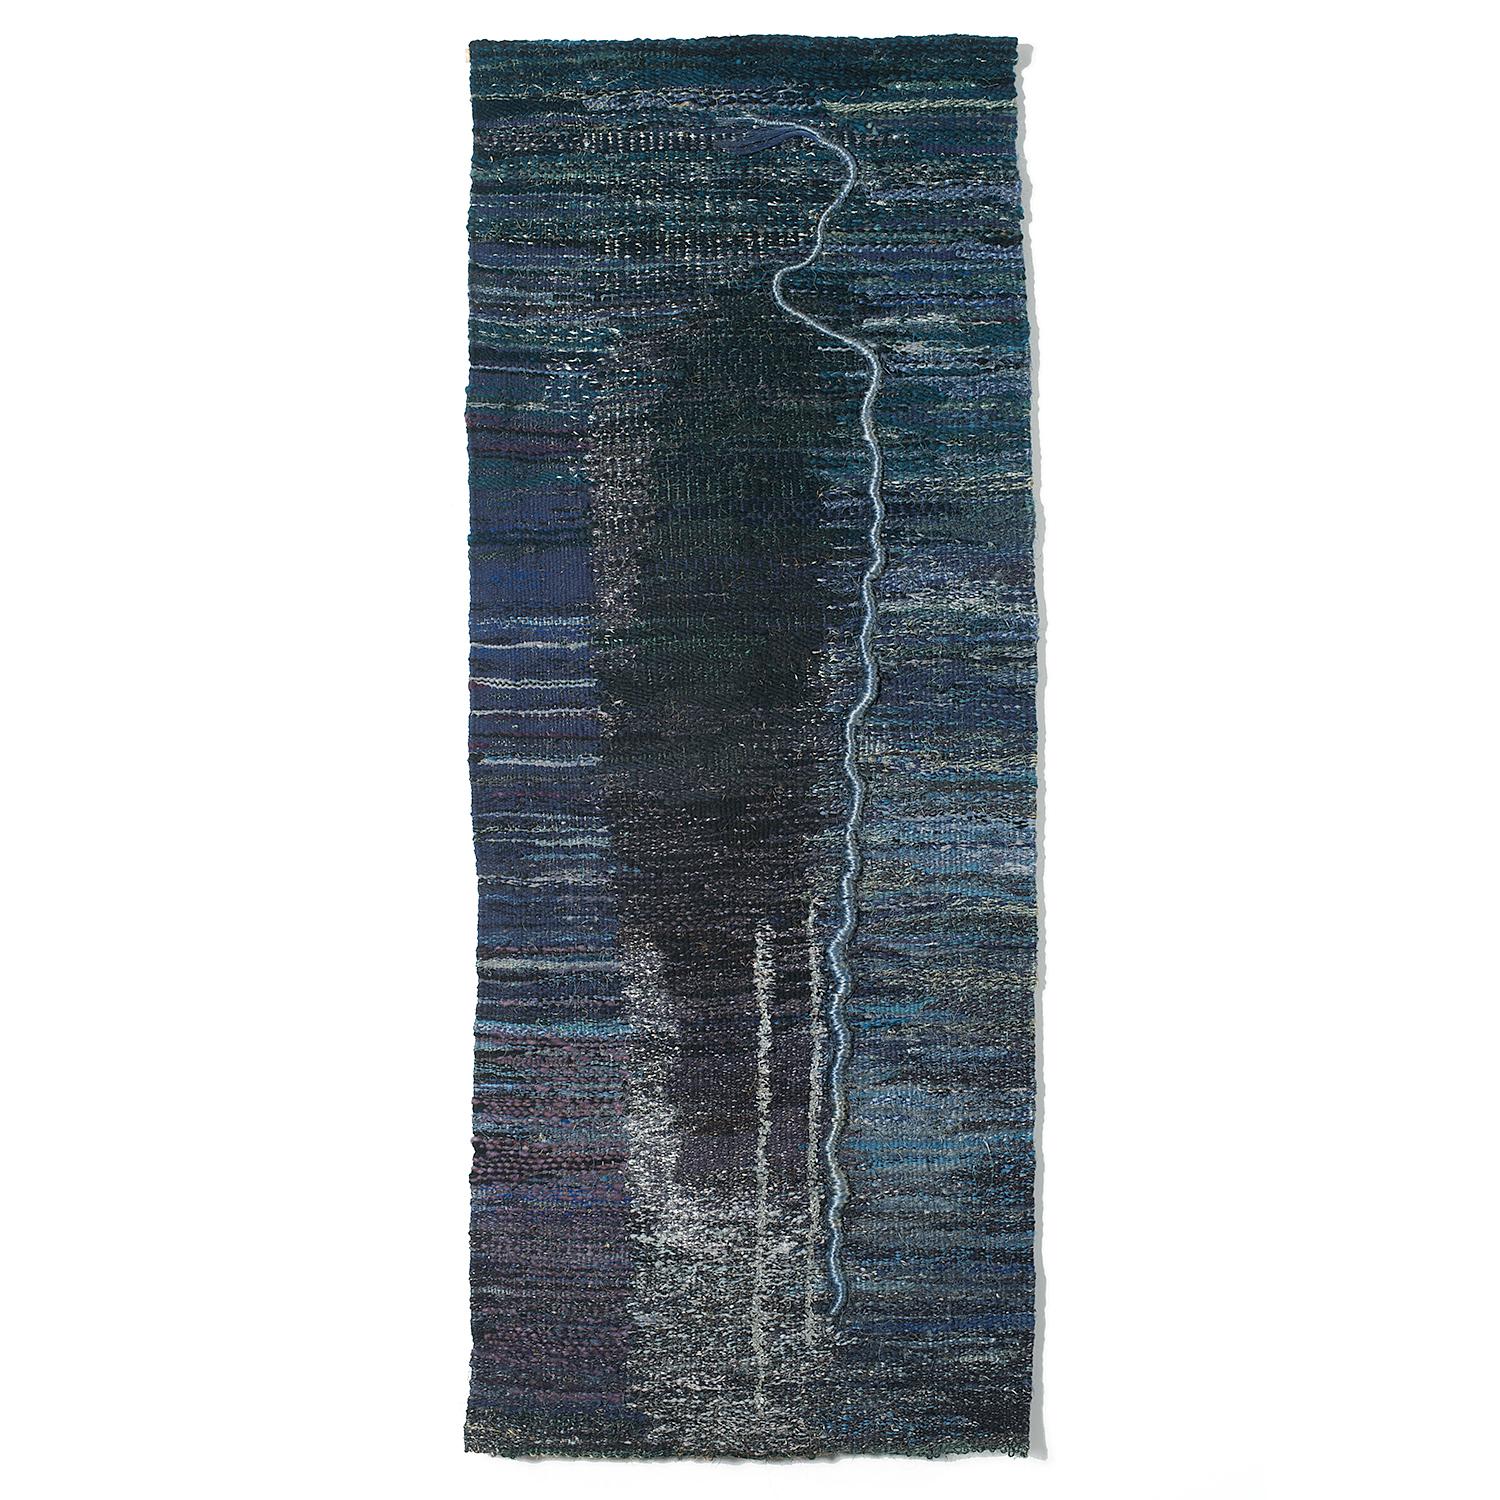 Odchodzacy (Departure II), tapisserie abstraite figurative, sculpture en textile